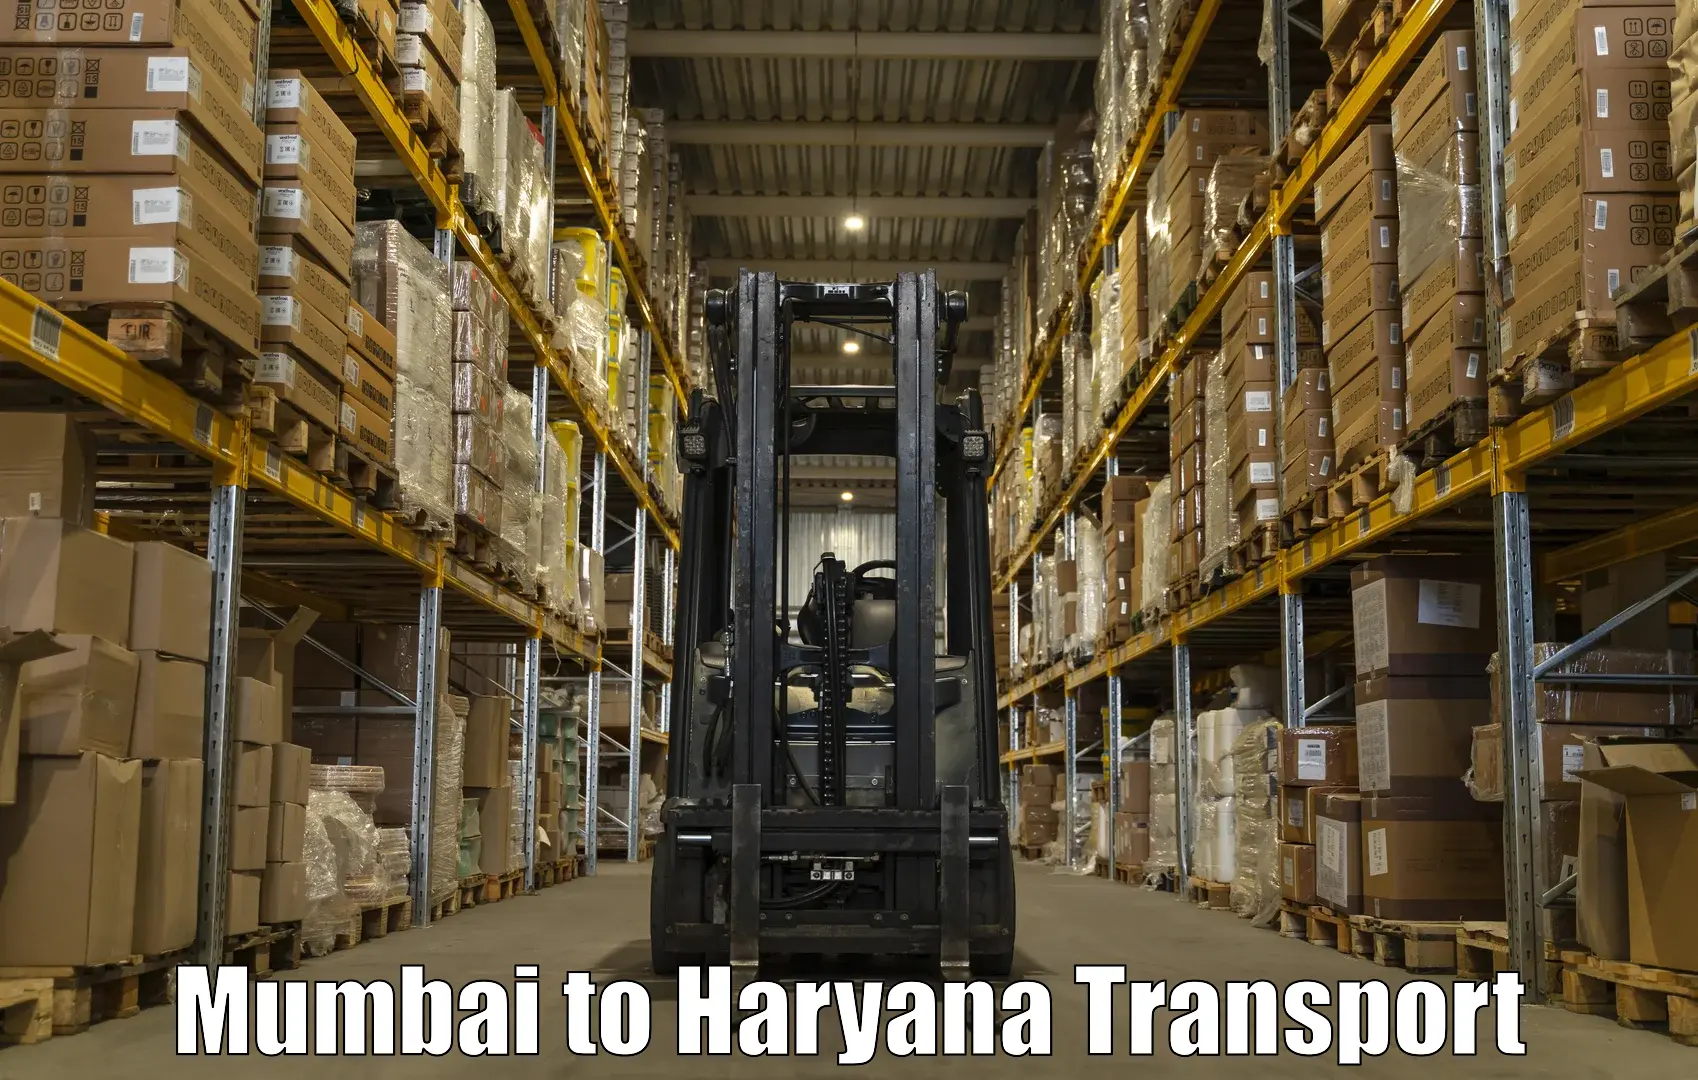 Truck transport companies in India Mumbai to Loharu